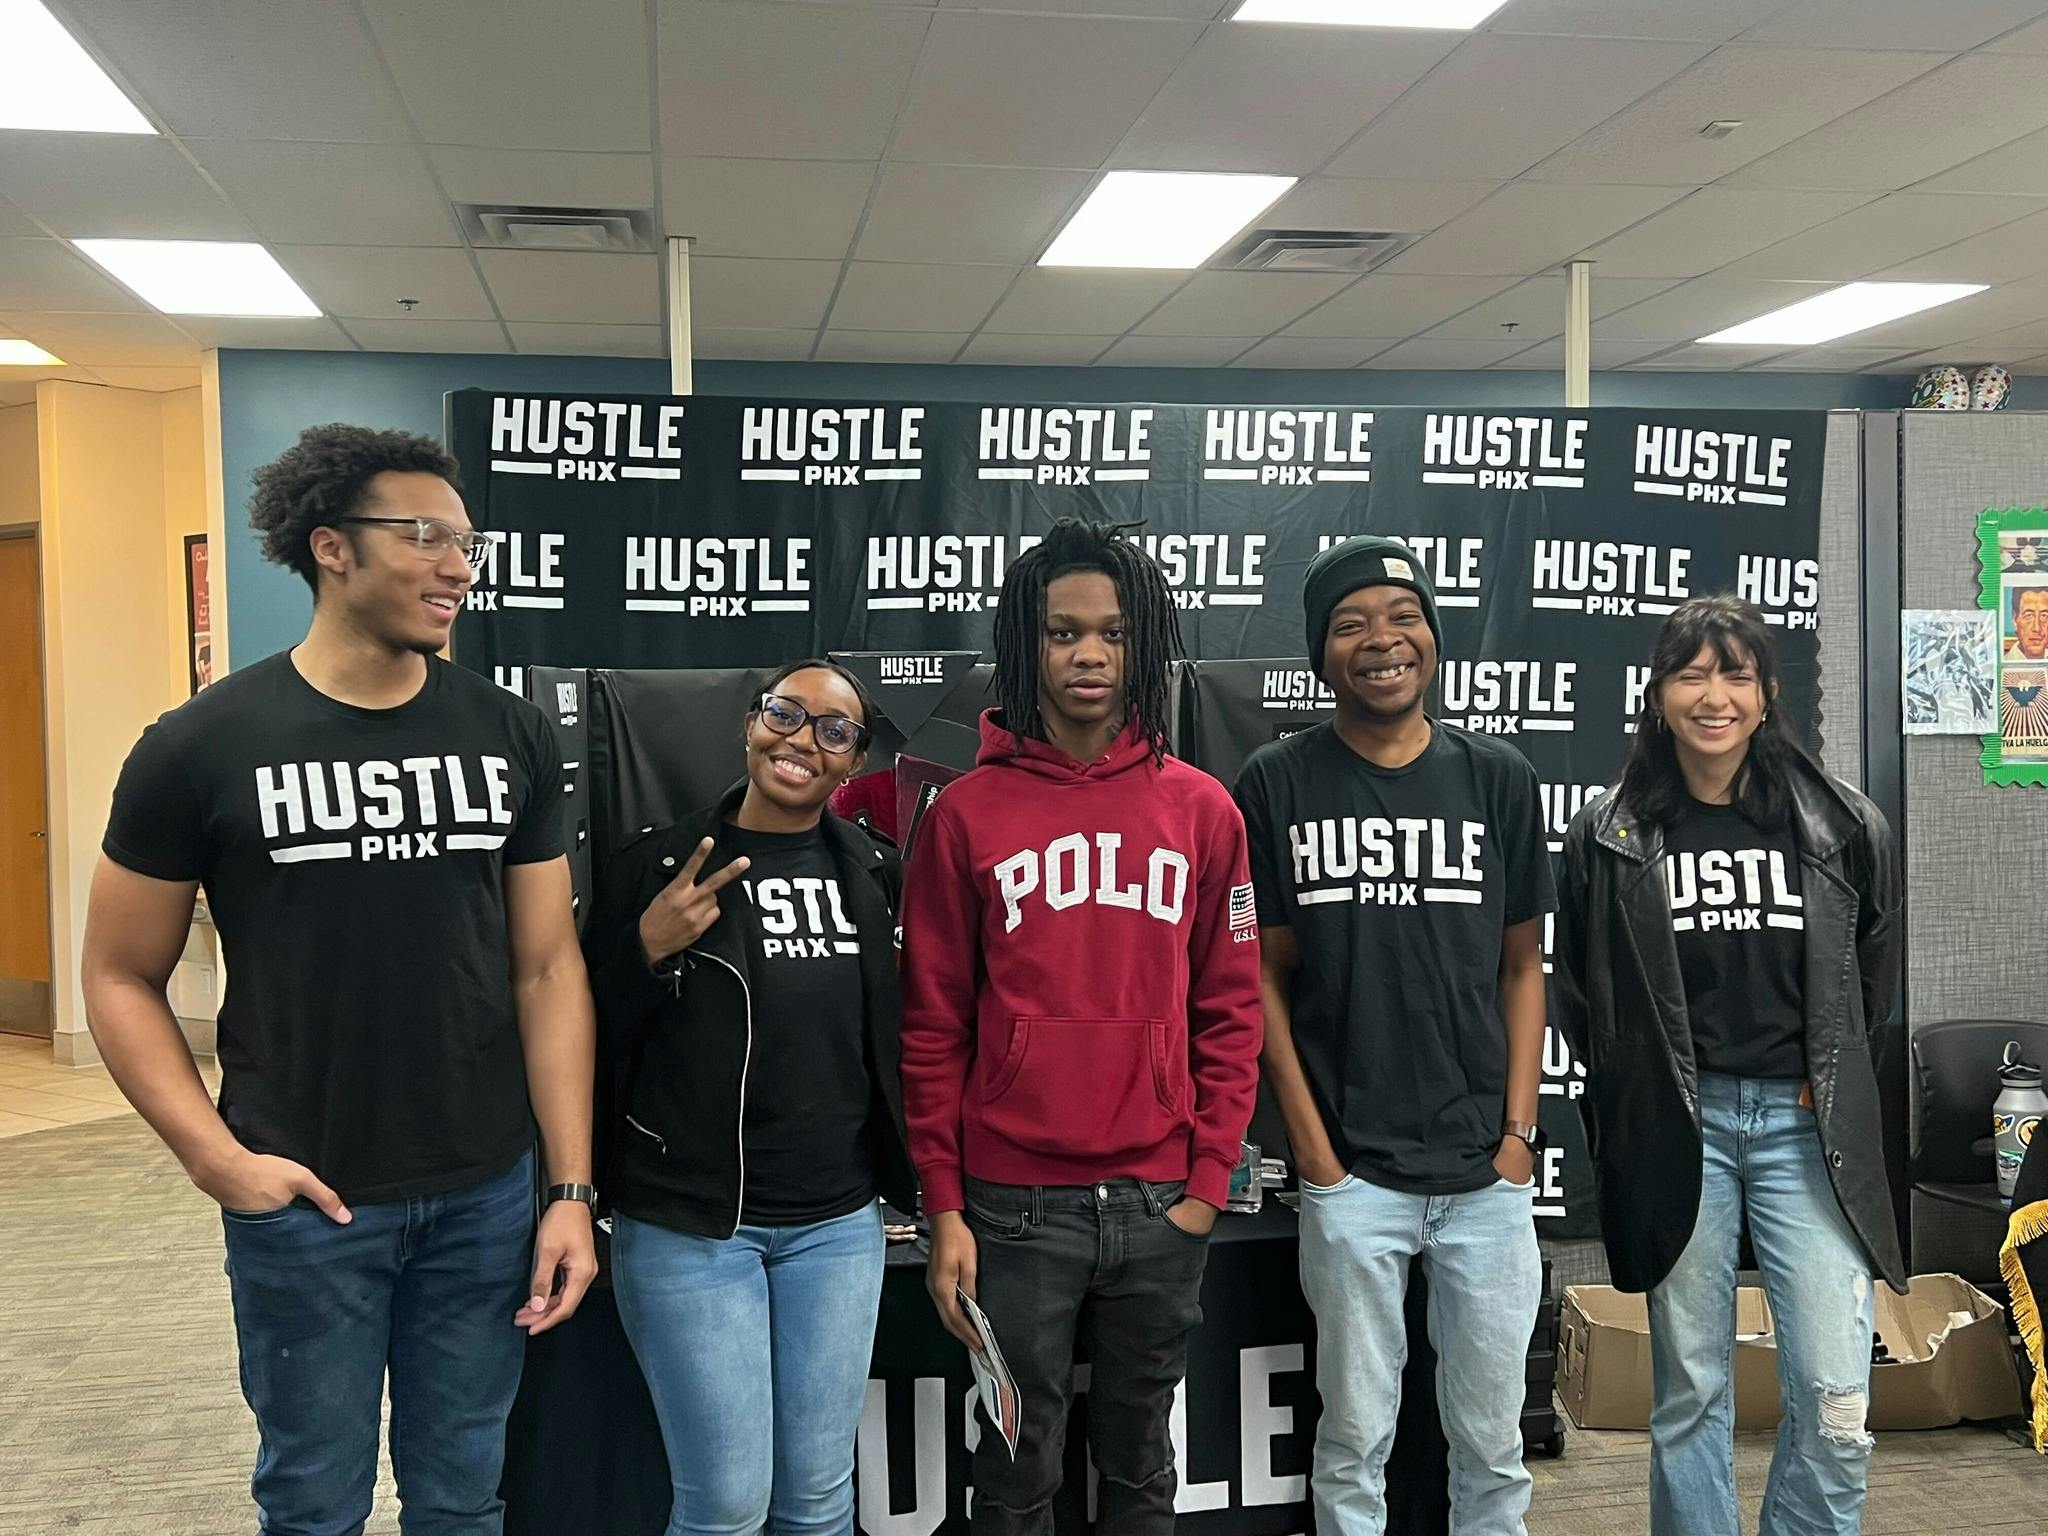 Group of 5 people smiling wearing Hustle PHX shirts